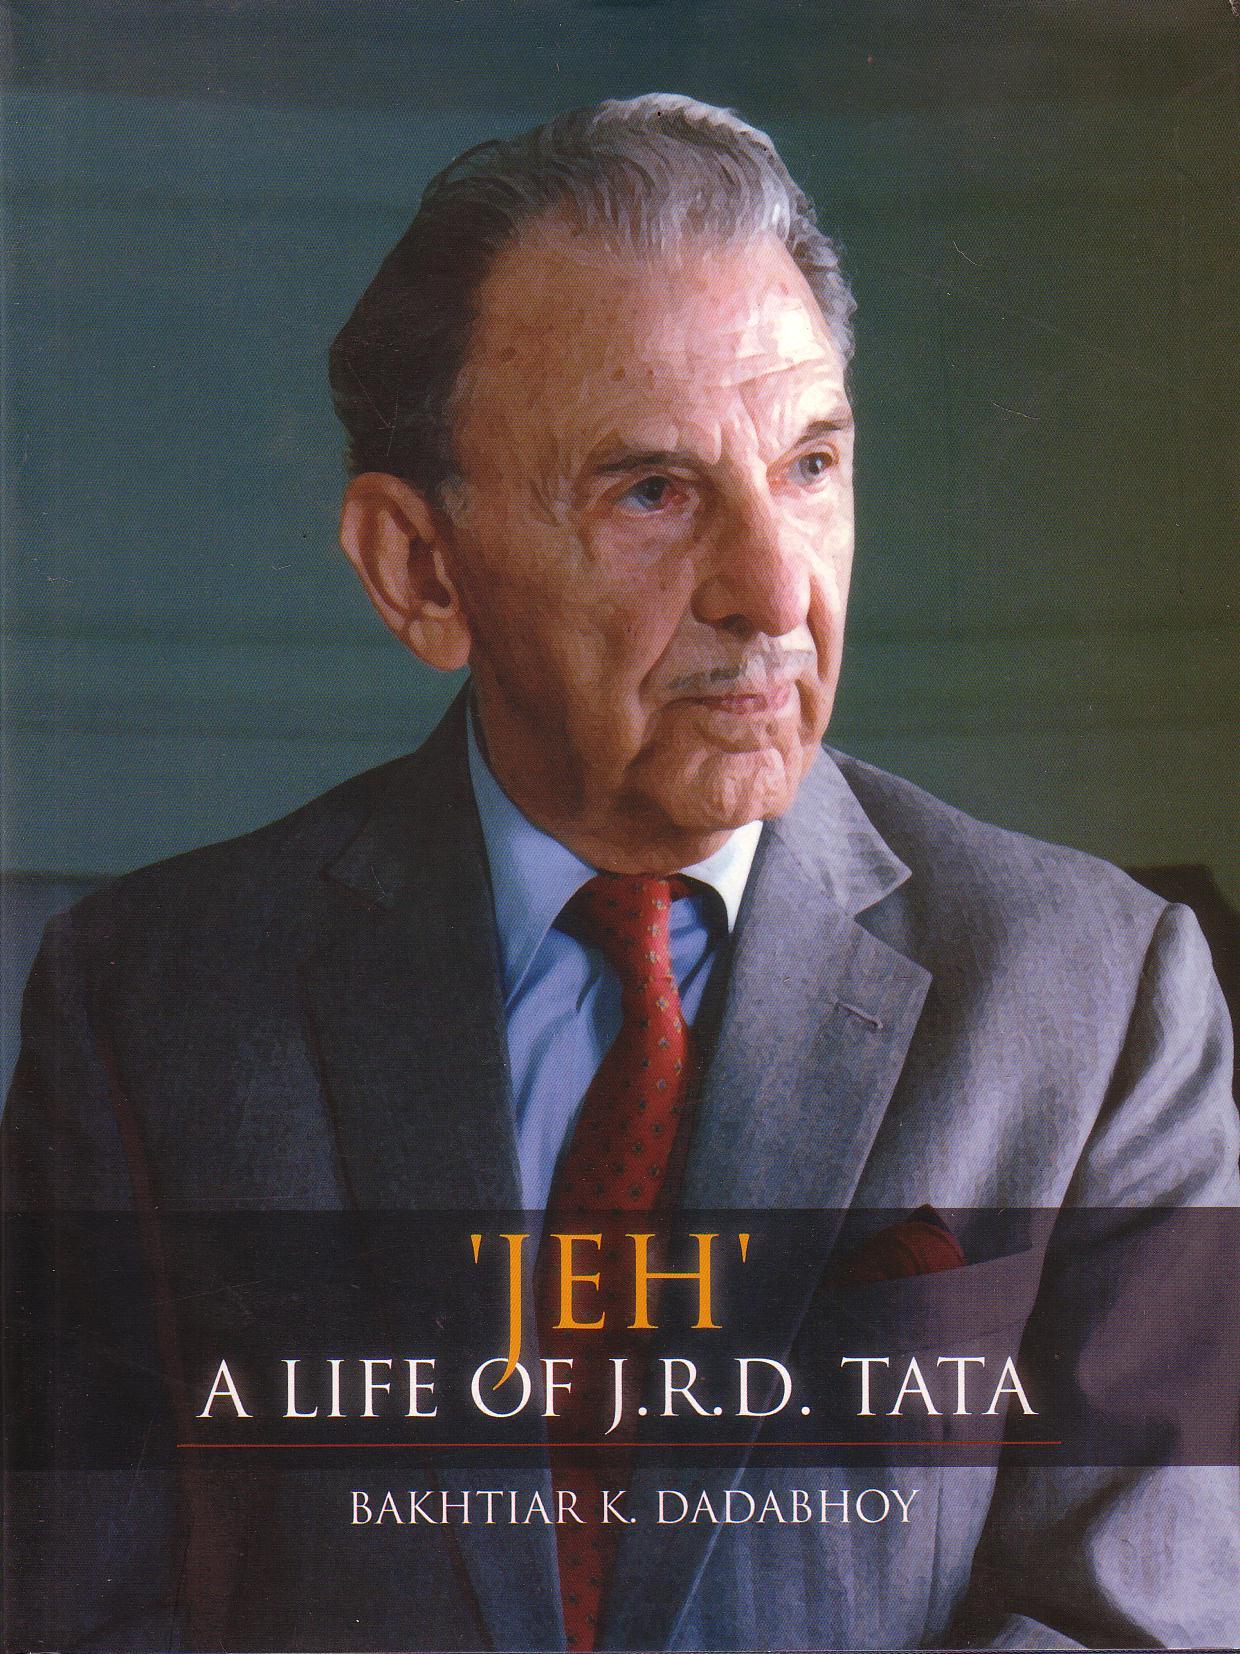 Jeh' A Life Of J. R. D. Tata